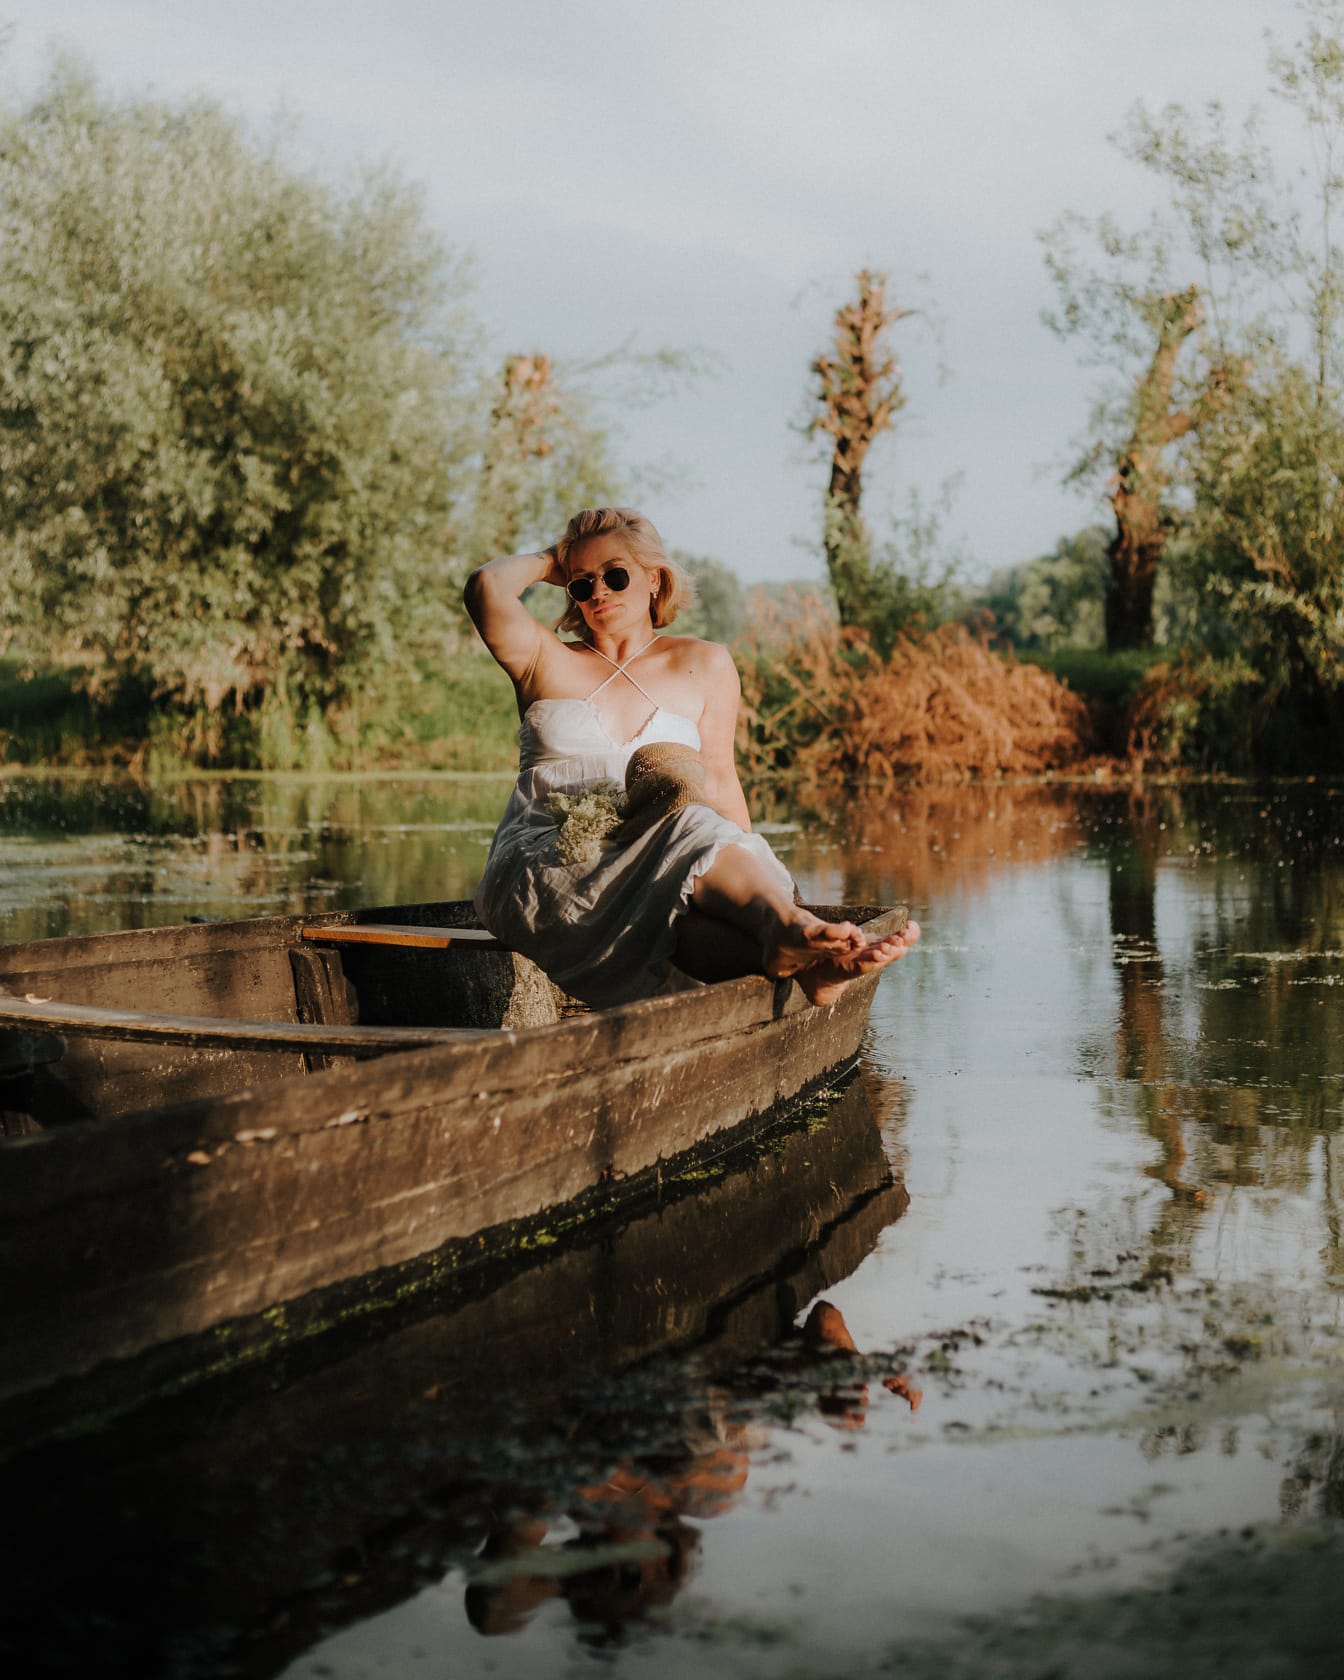 Wanita cantik duduk di perahu kayu di tepi danau